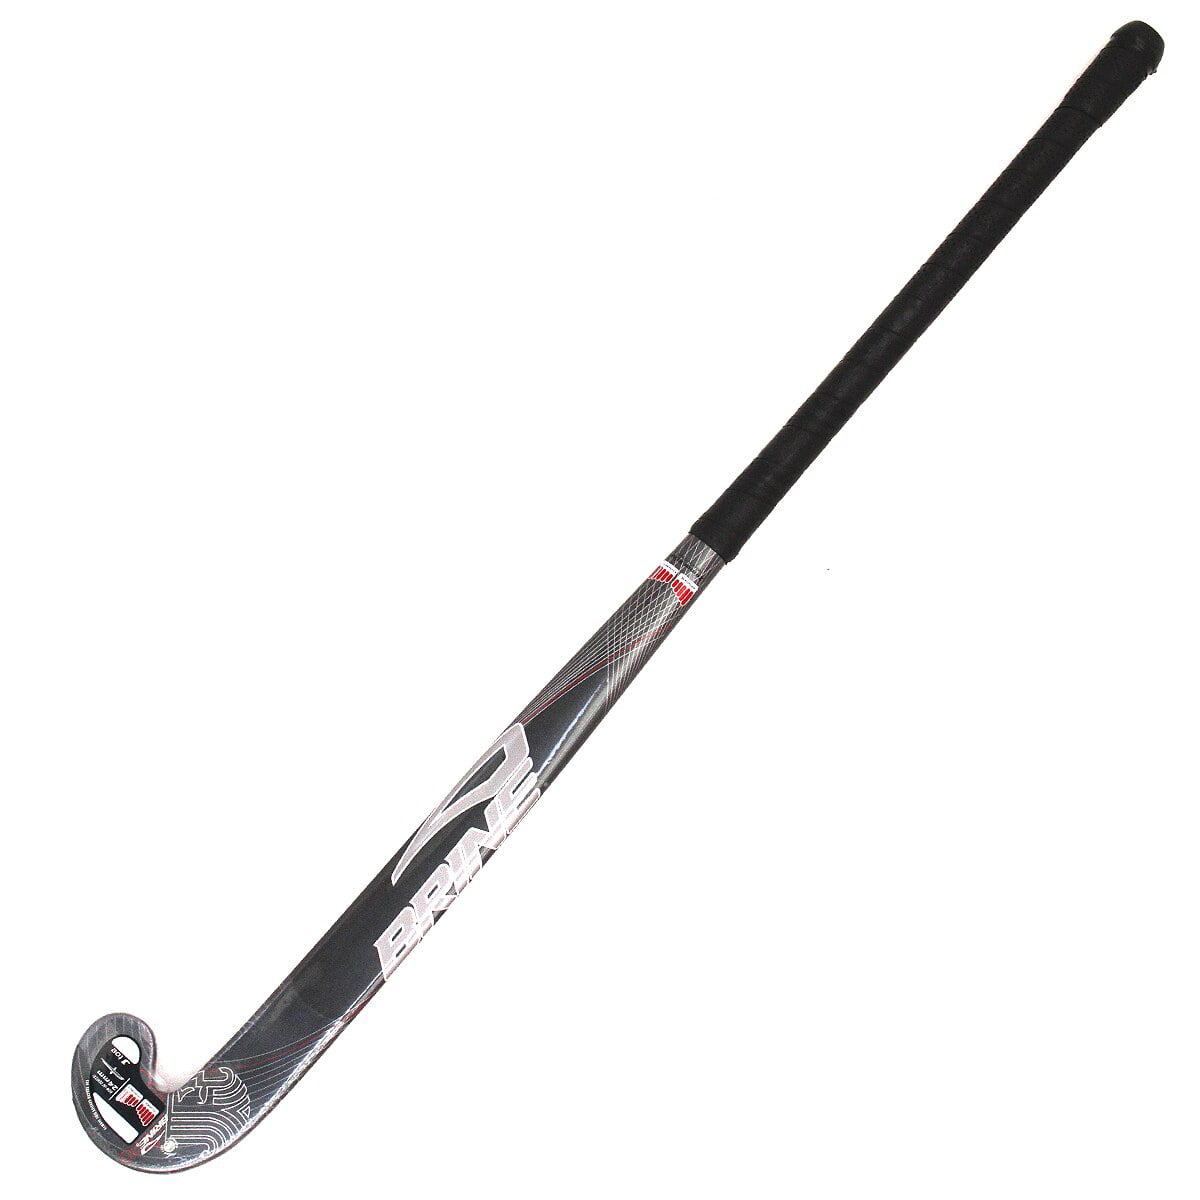 Brine Cempa 5.5 24mm Bow Composite Field Hockey Stick Lists @ $199.99 